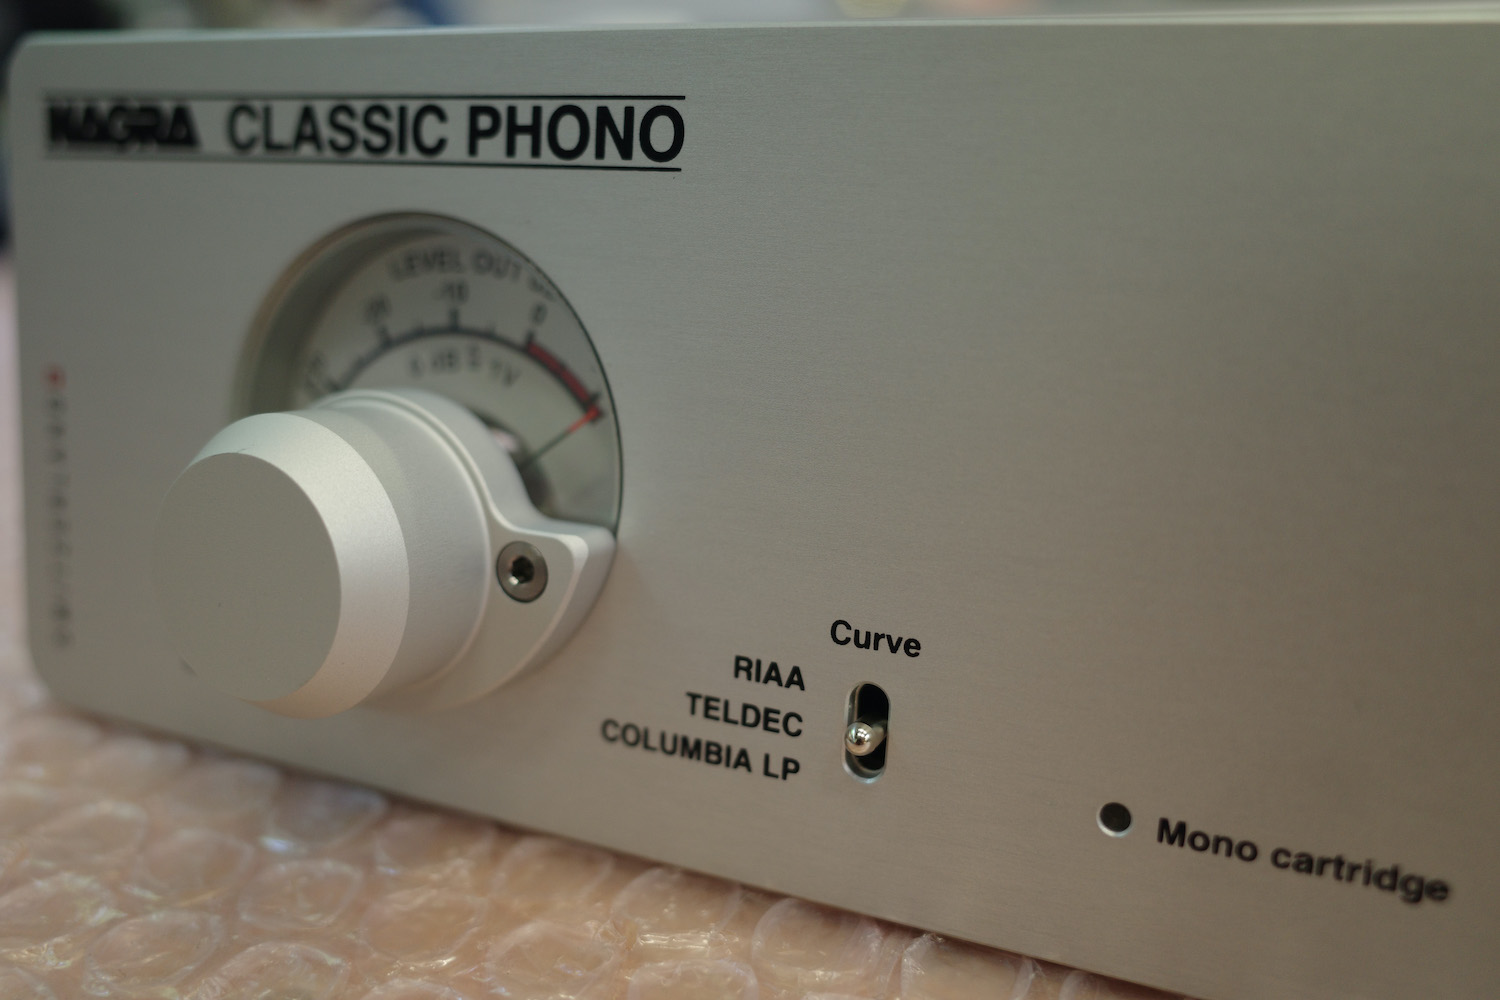 Nagra Classic Phono